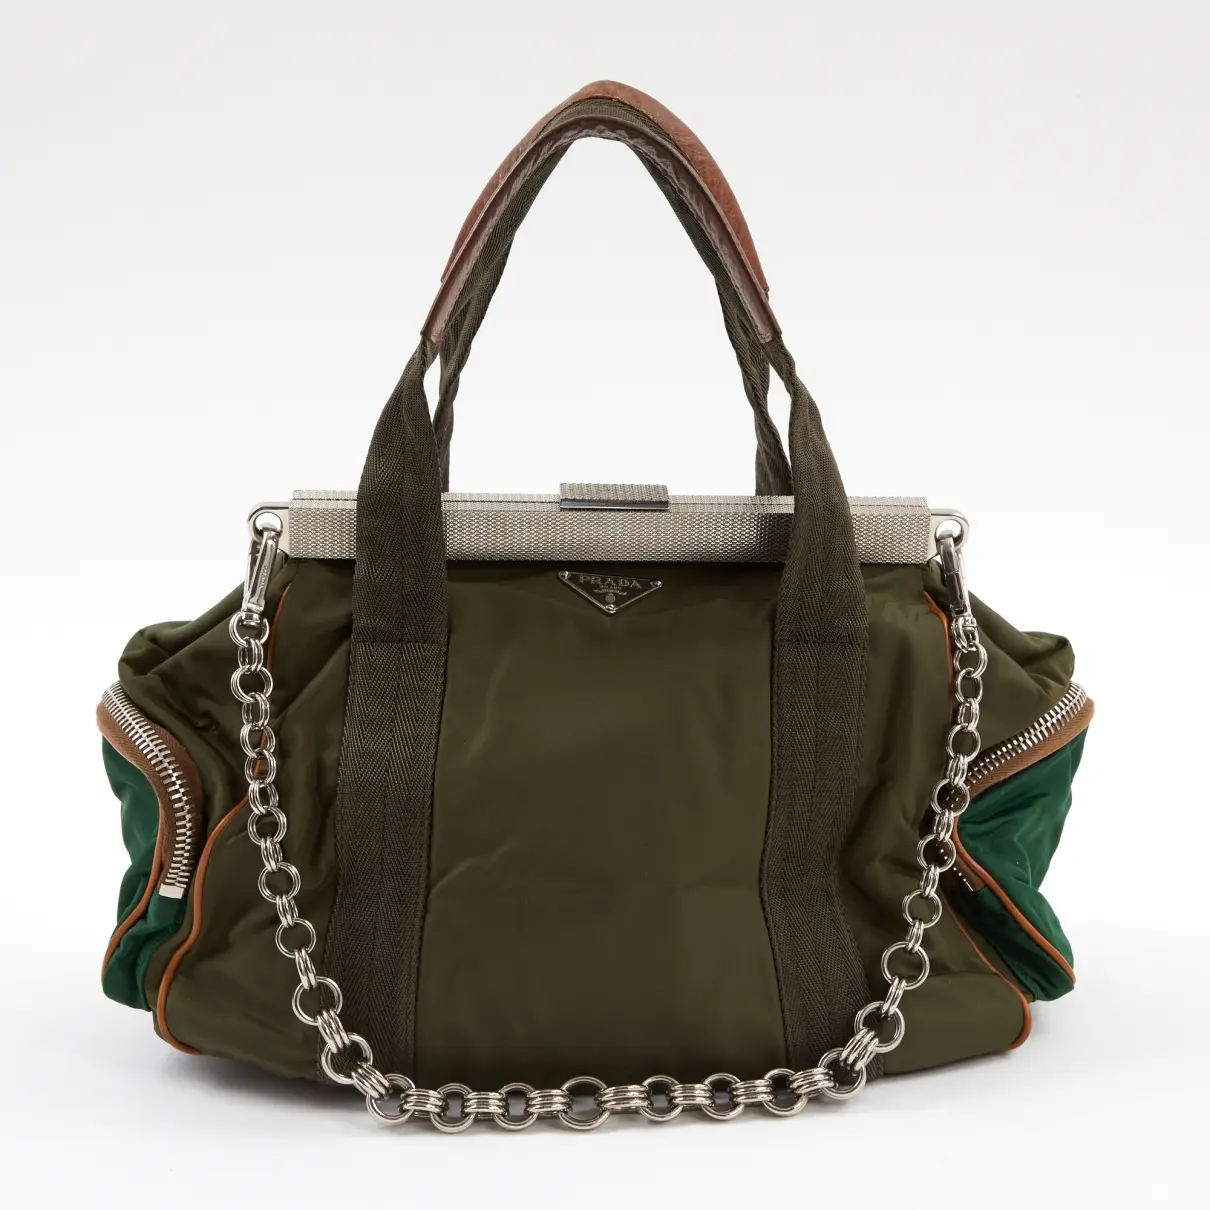 Buy Prada Cargo handbag online